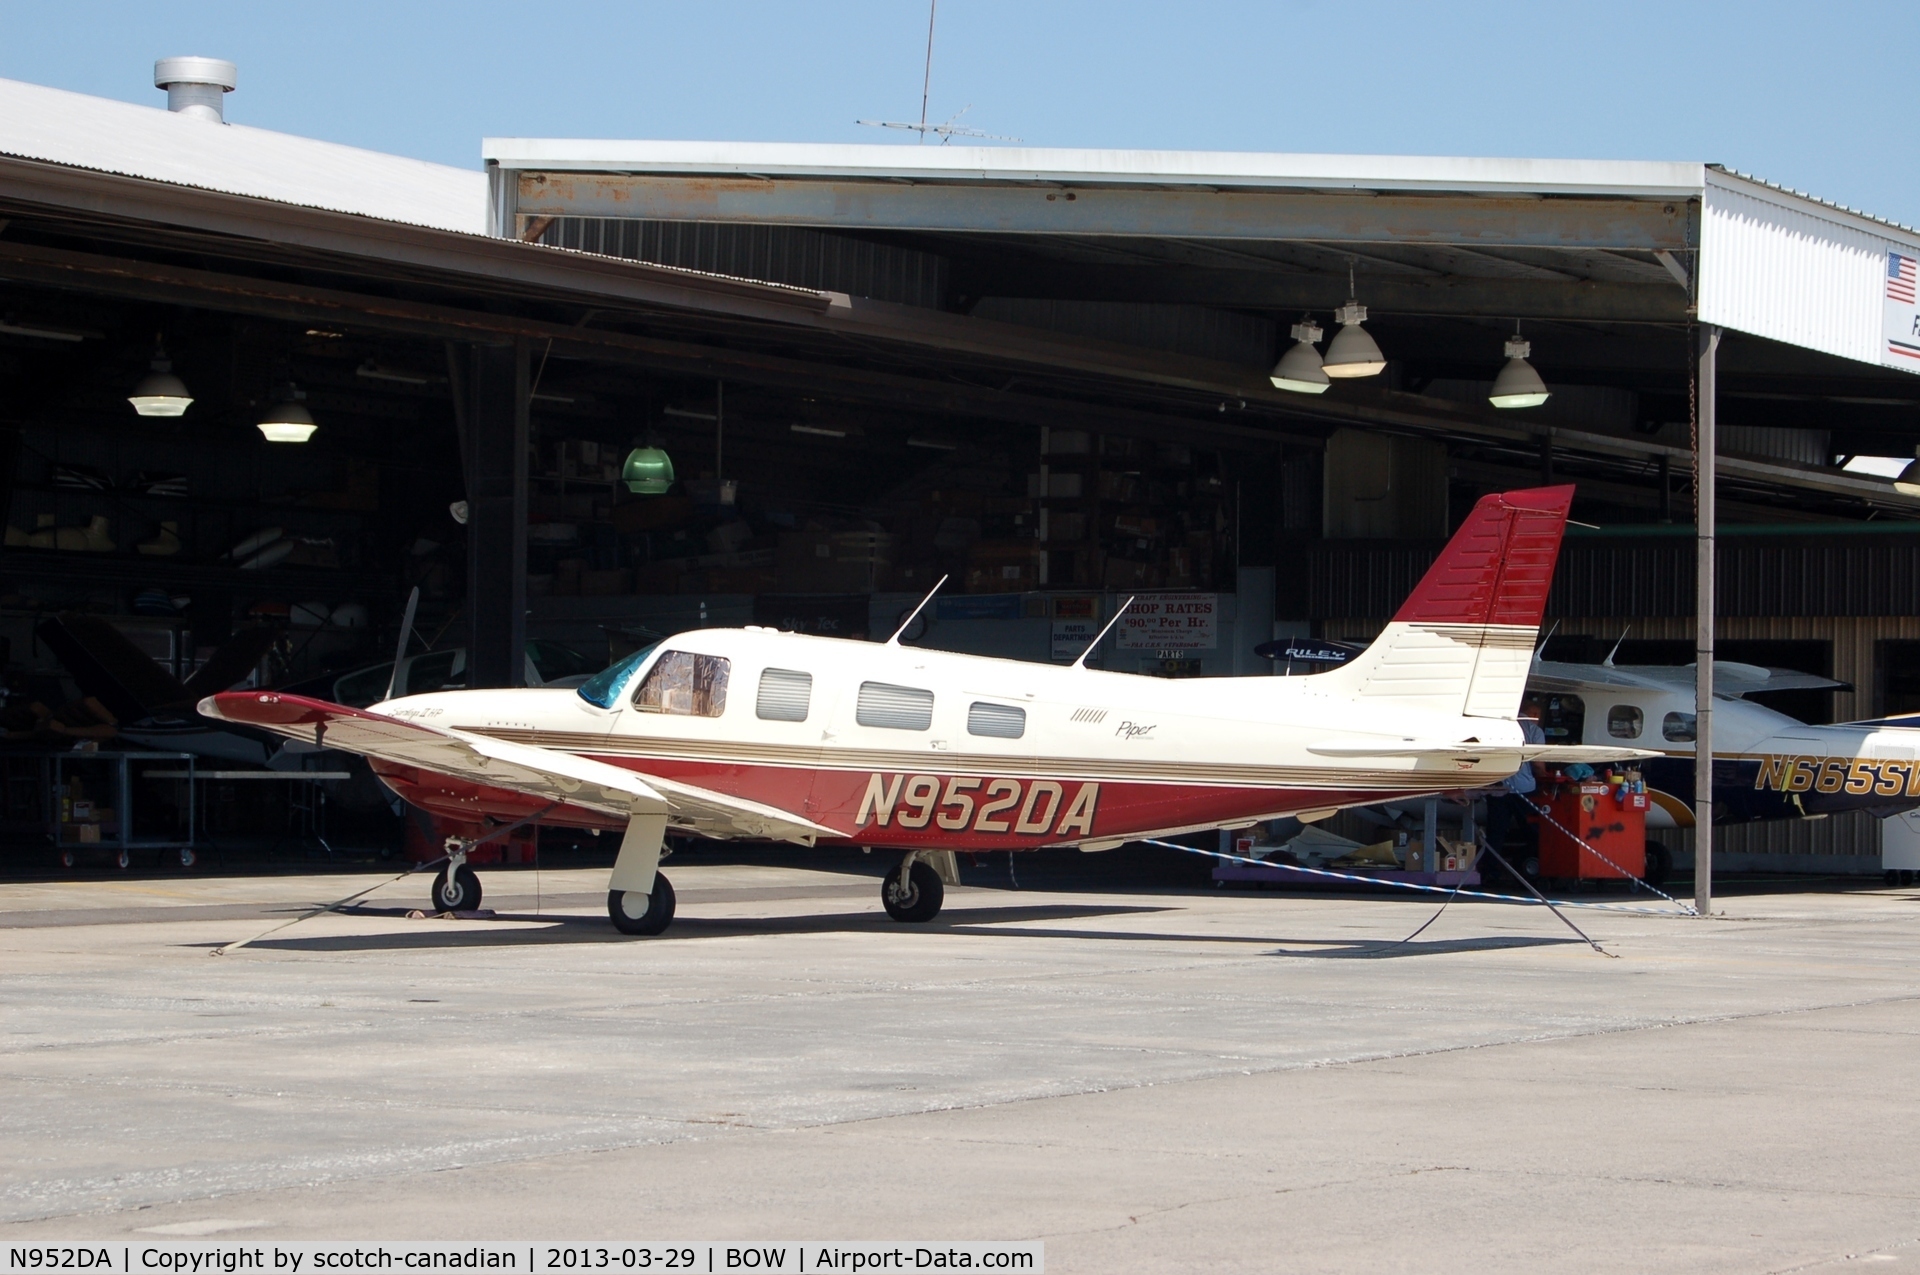 N952DA, 1995 Piper PA-32R-301 C/N 3213103, 1995 Piper PA-32R-301, N952DA, at Bartow Municipal Airport, Bartow, FL